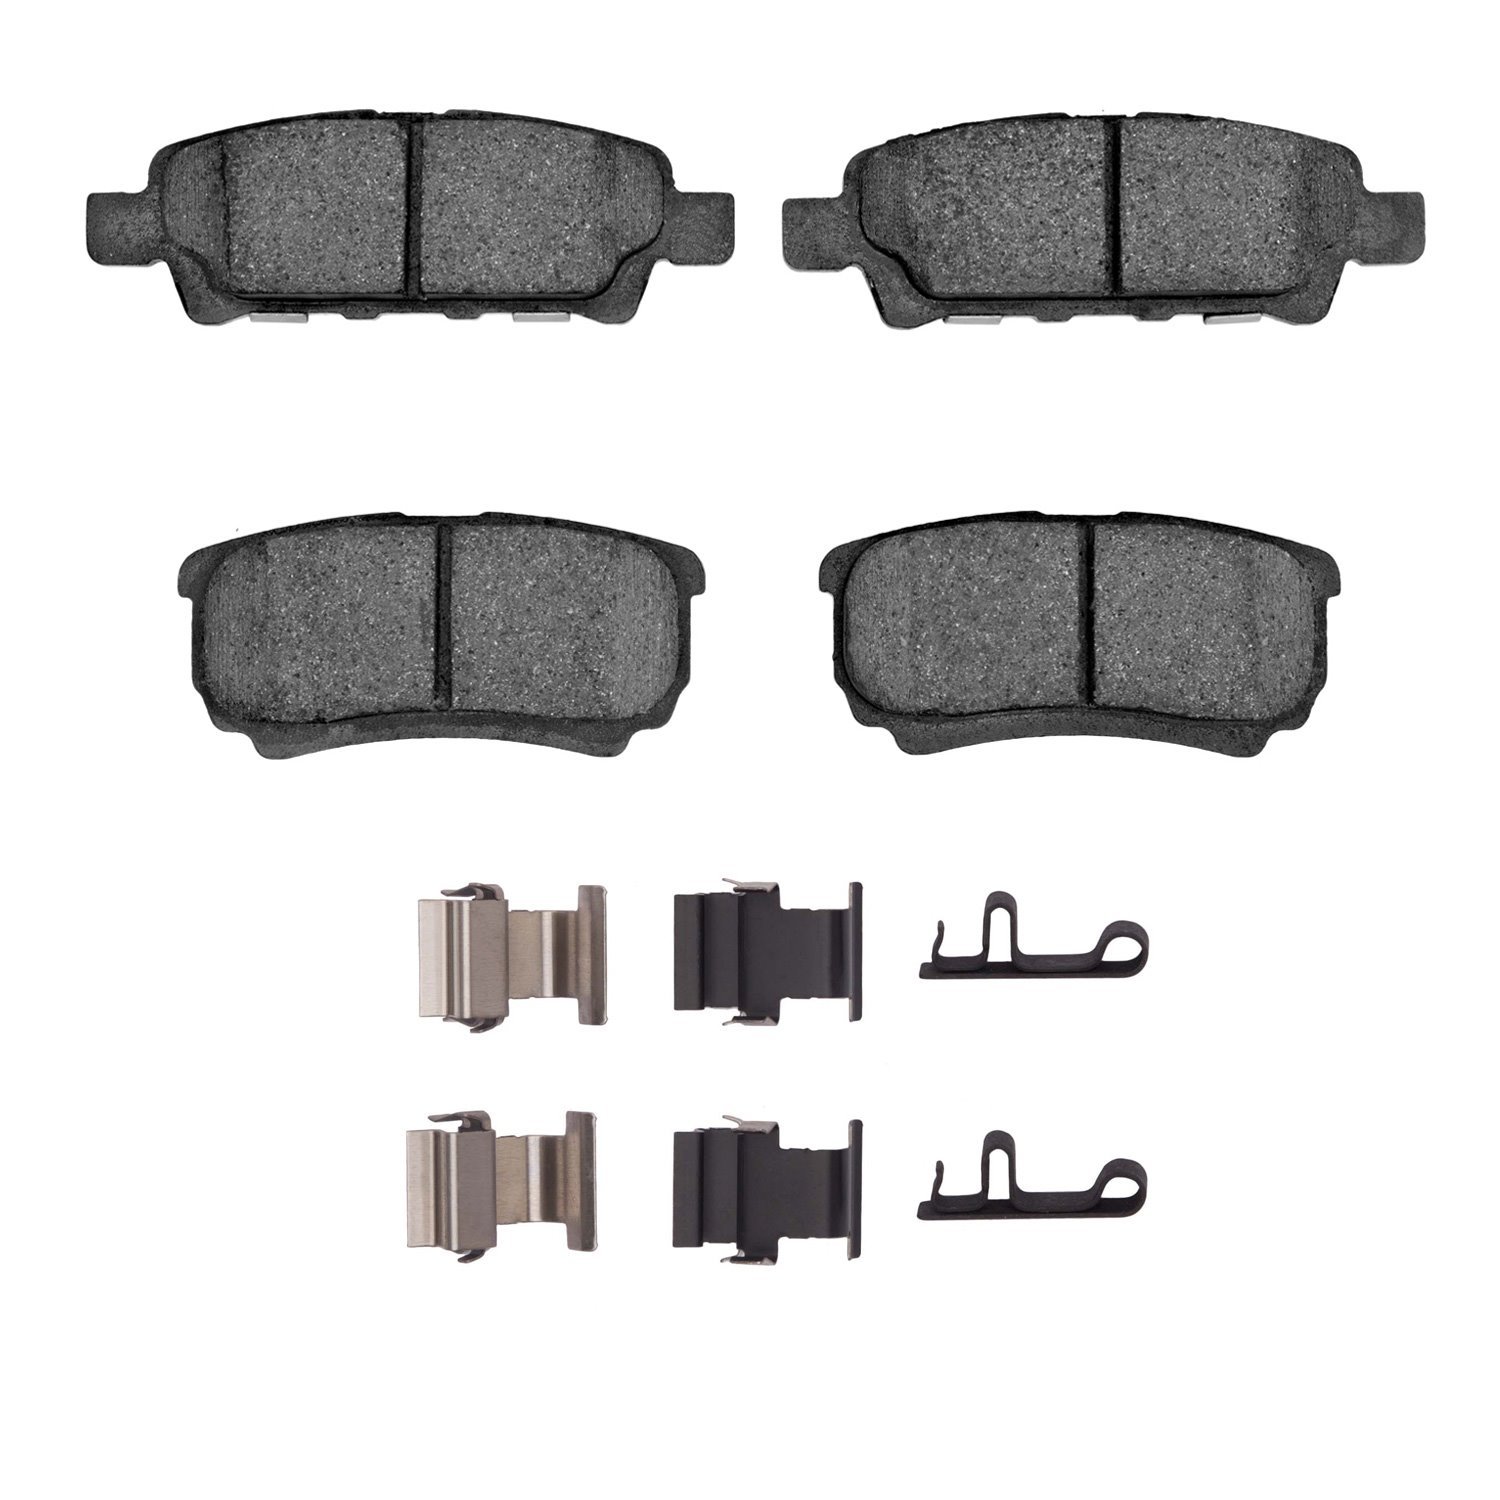 Ceramic Brake Pads & Hardware Kit, 2004-2017 Fits Multiple Makes/Models, Position: Rear